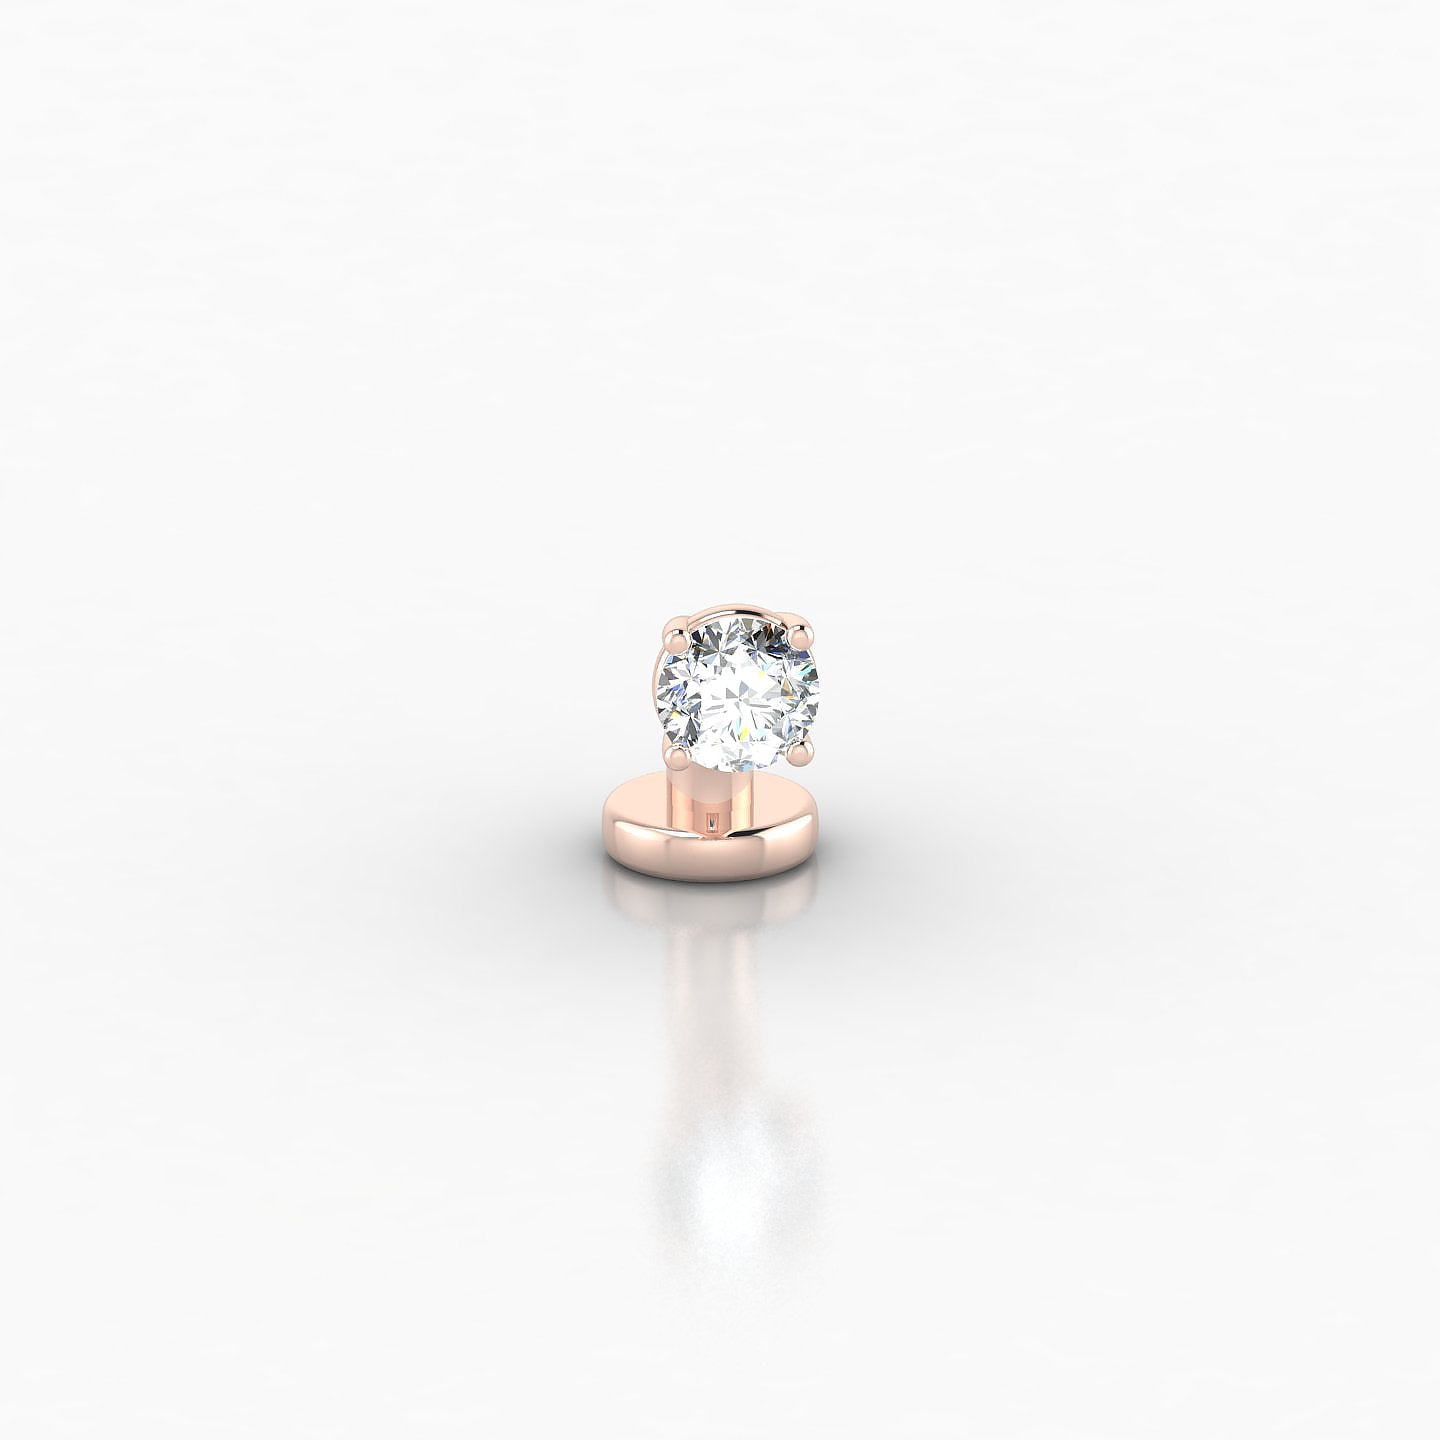 Nut | 18k Rose Gold 6 mm 3 mm Round Diamond Floating Navel Piercing